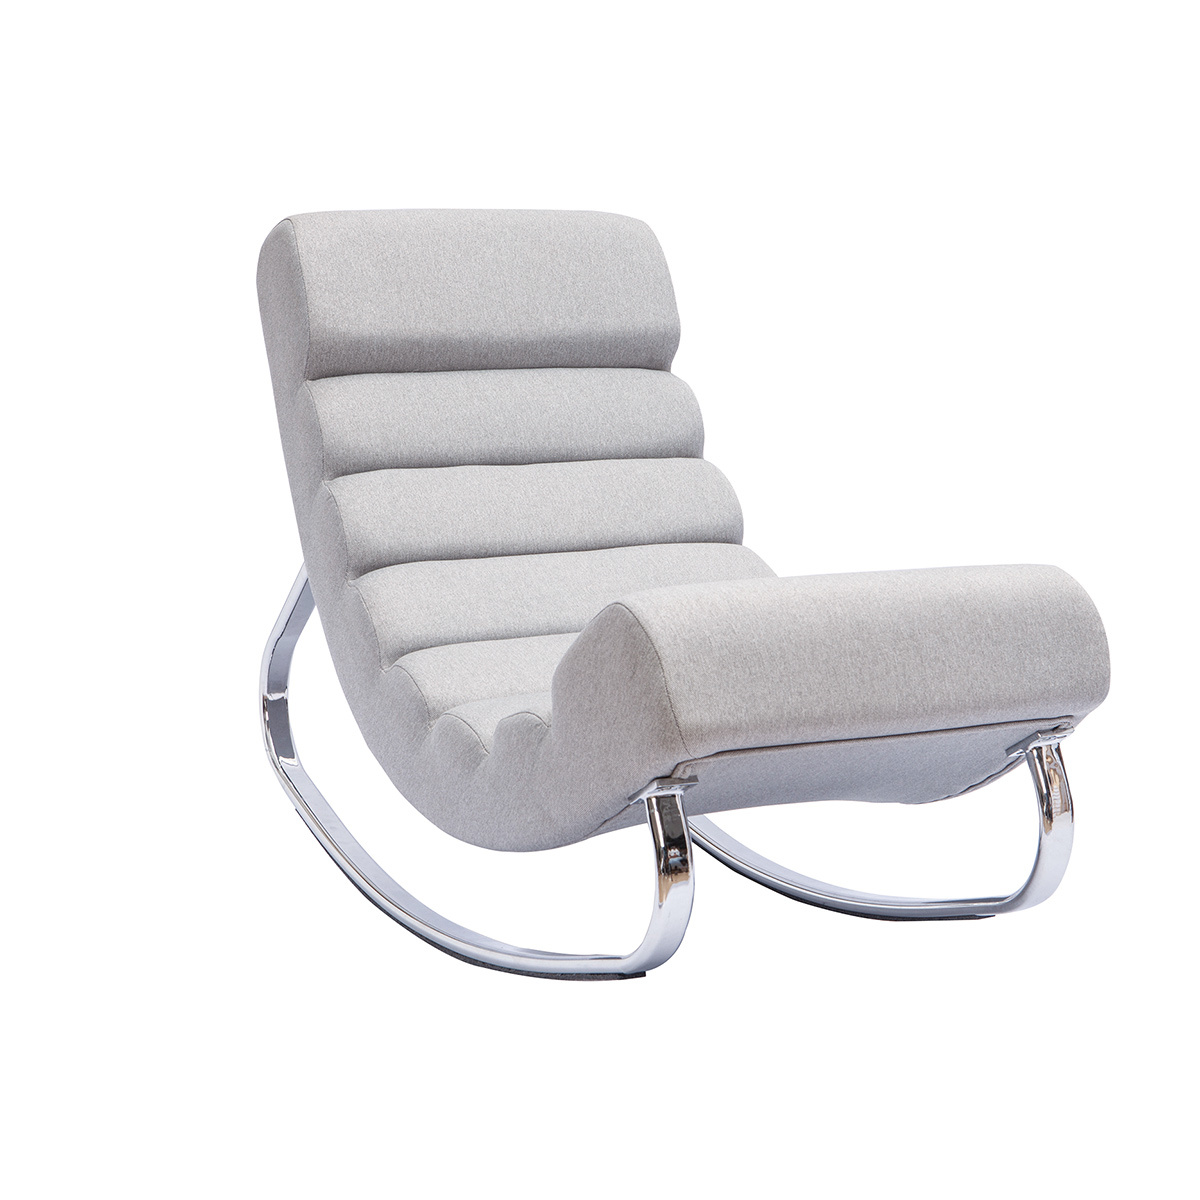 Fauteuil rocking chair design en tissu gris clair TAYLOR vue1